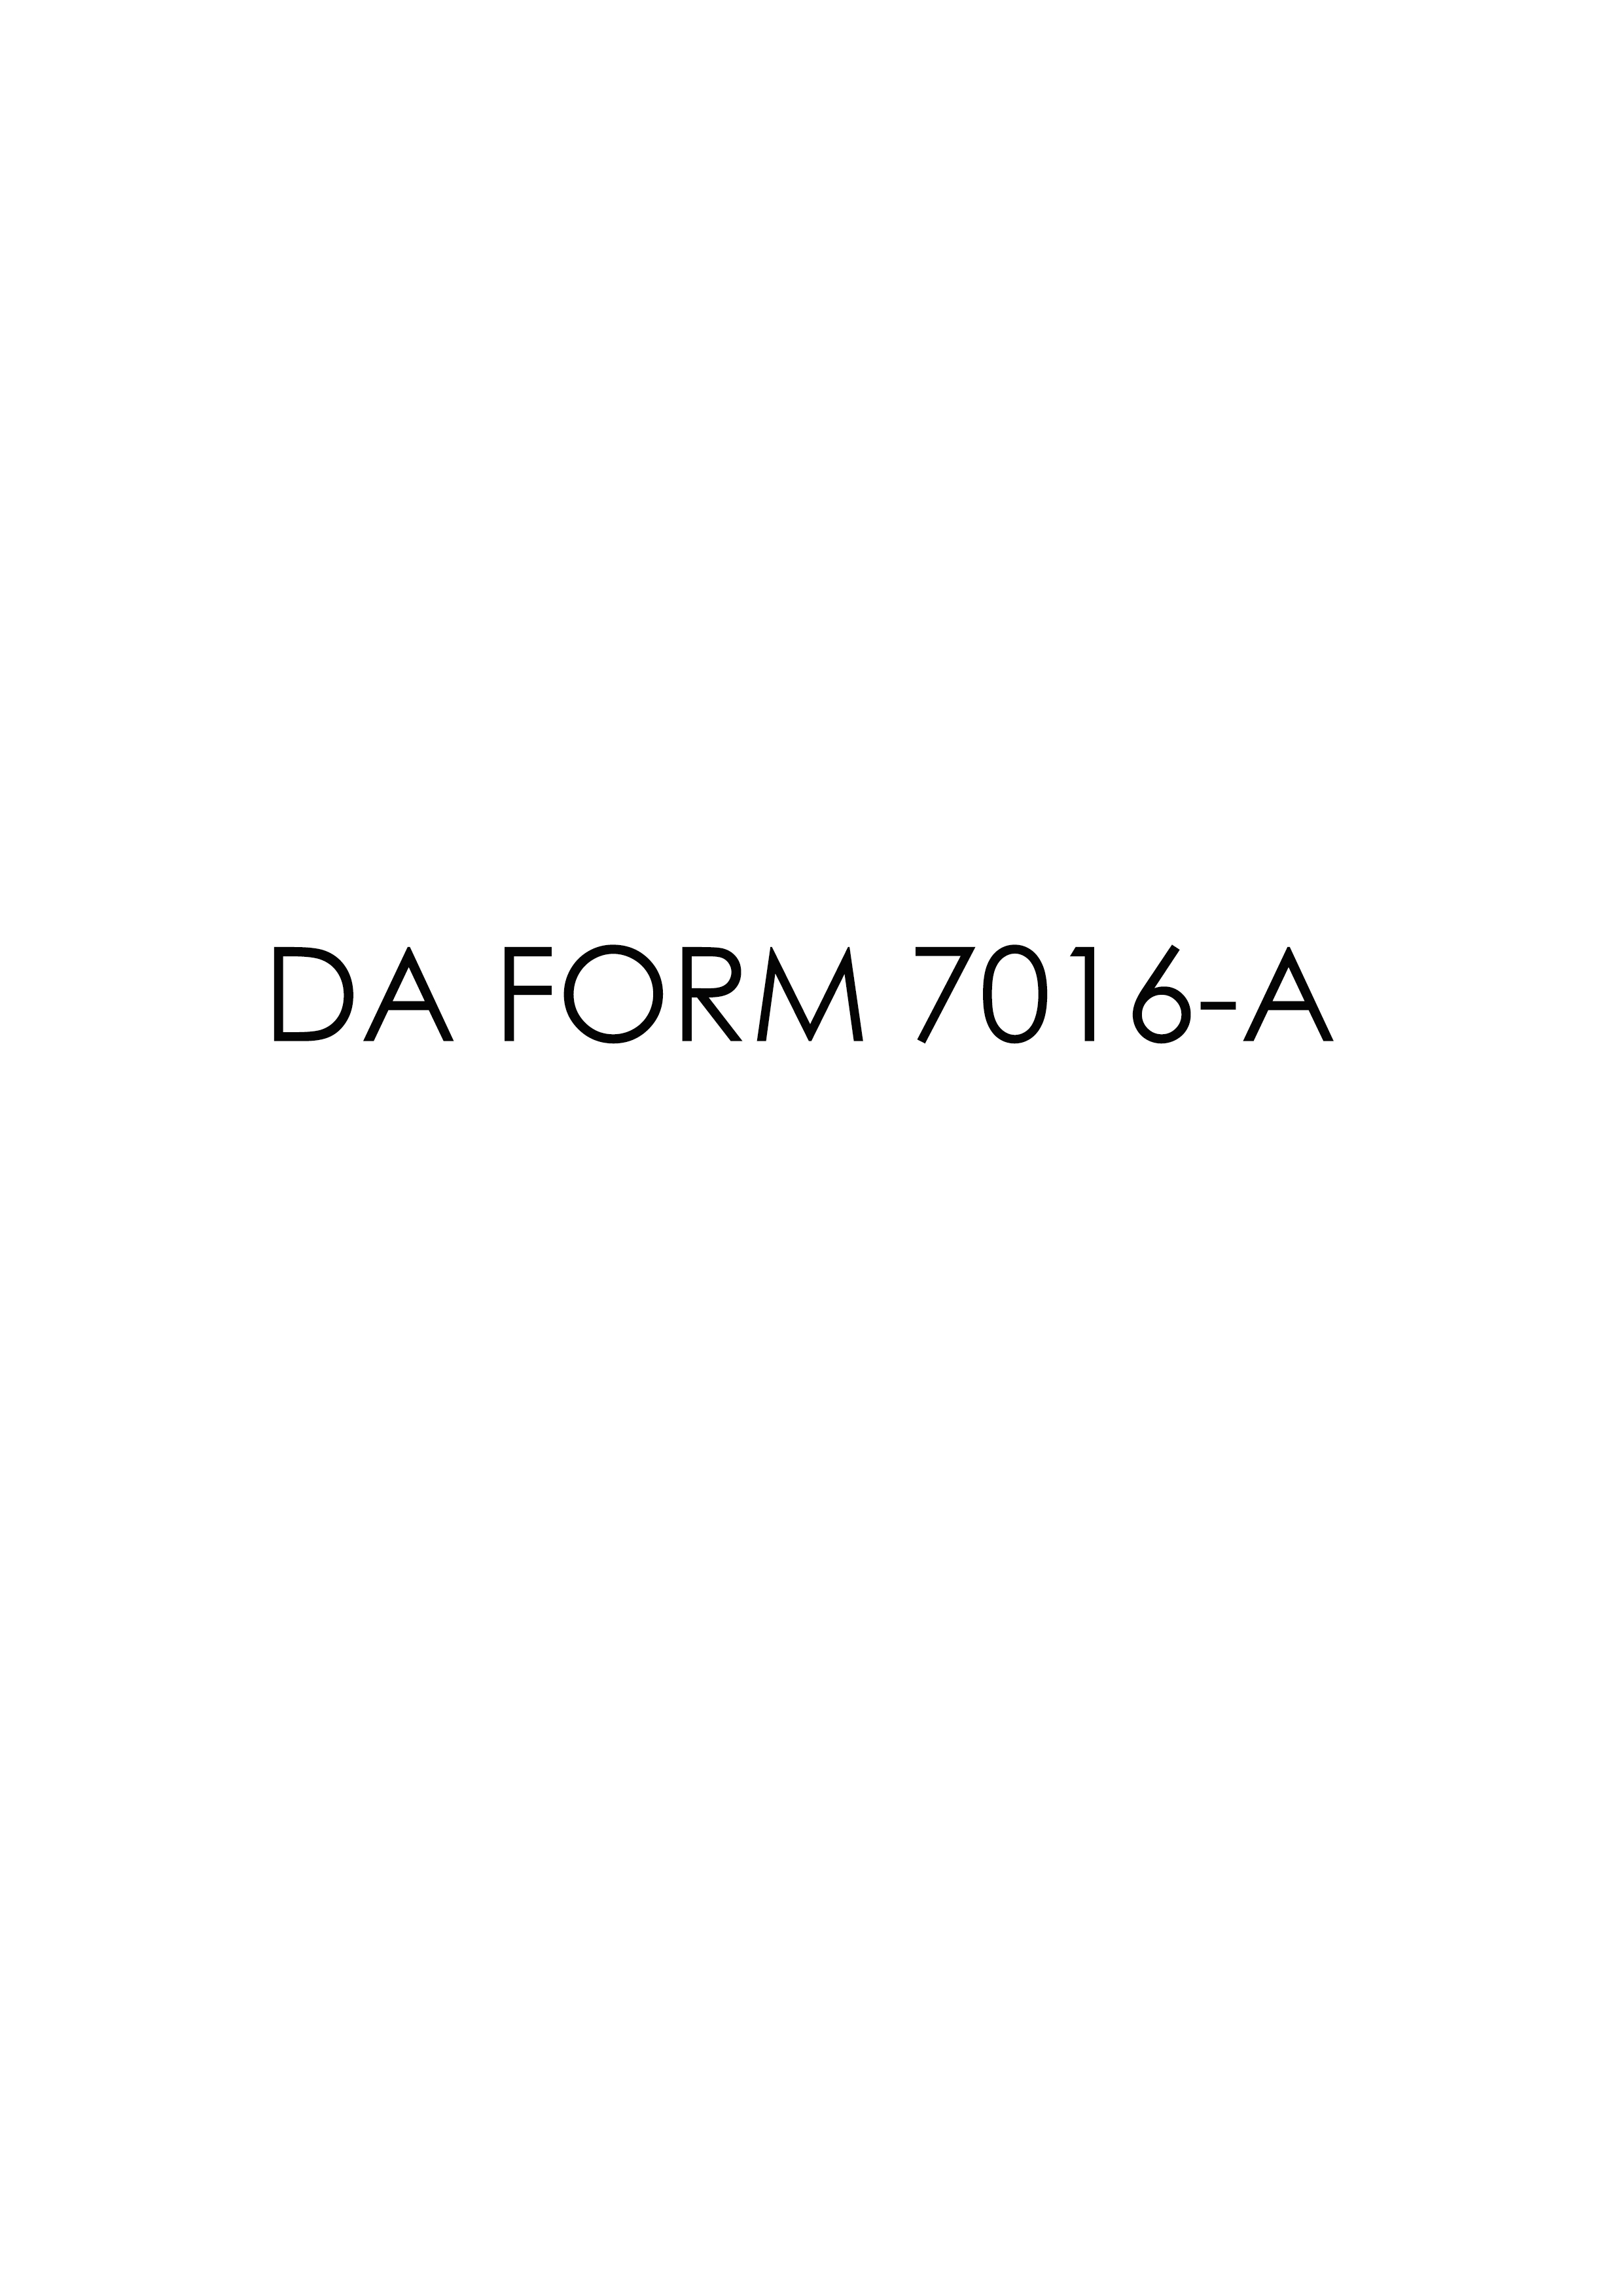 da Form 7016-A fillable